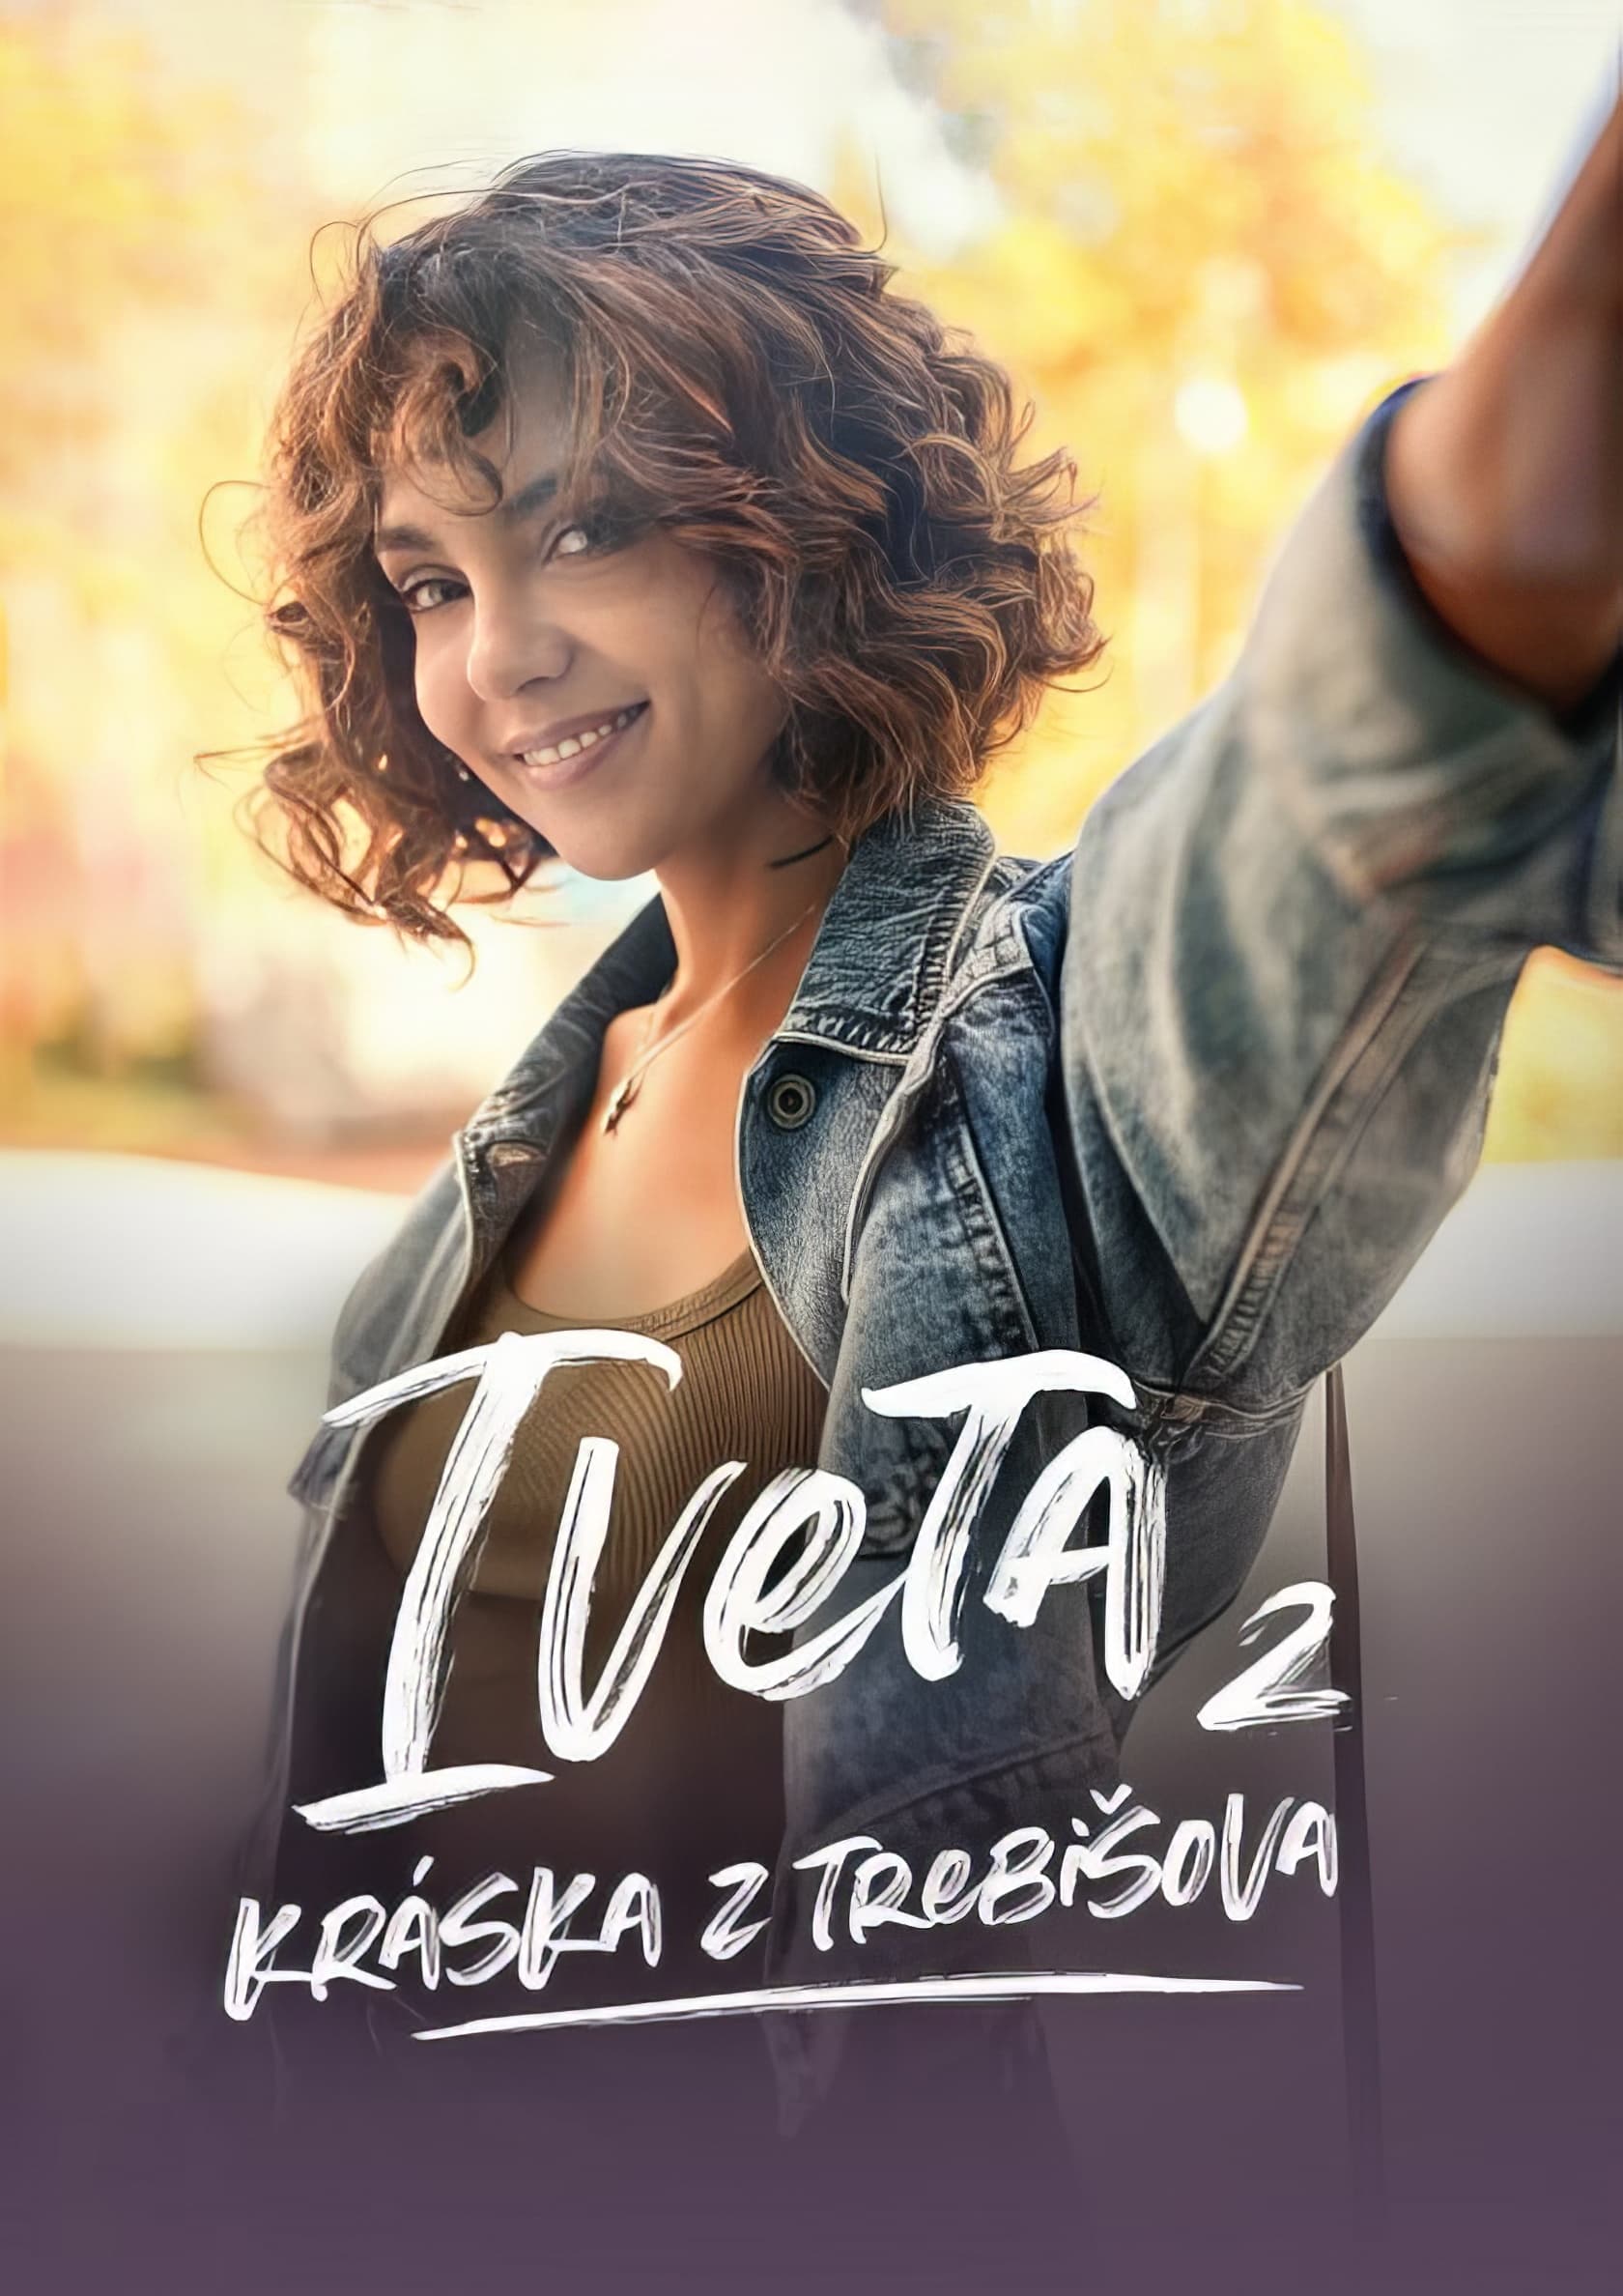 Plakát pro film “Iveta”